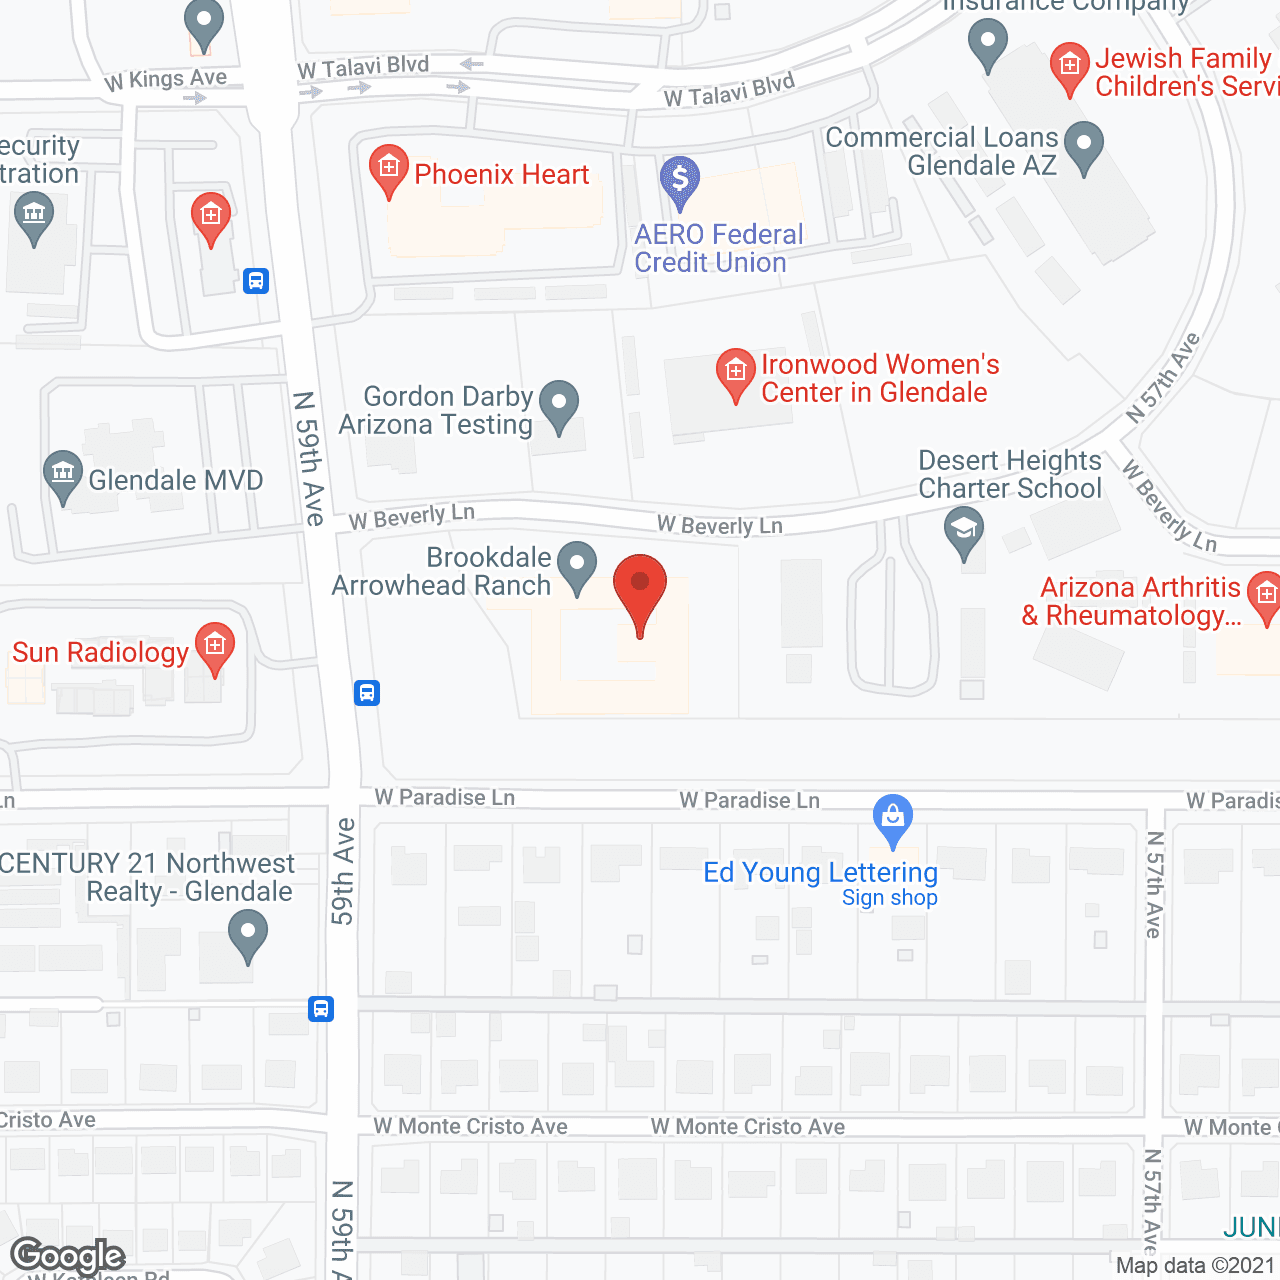 Marriott's Village Oaks at Glendale in google map